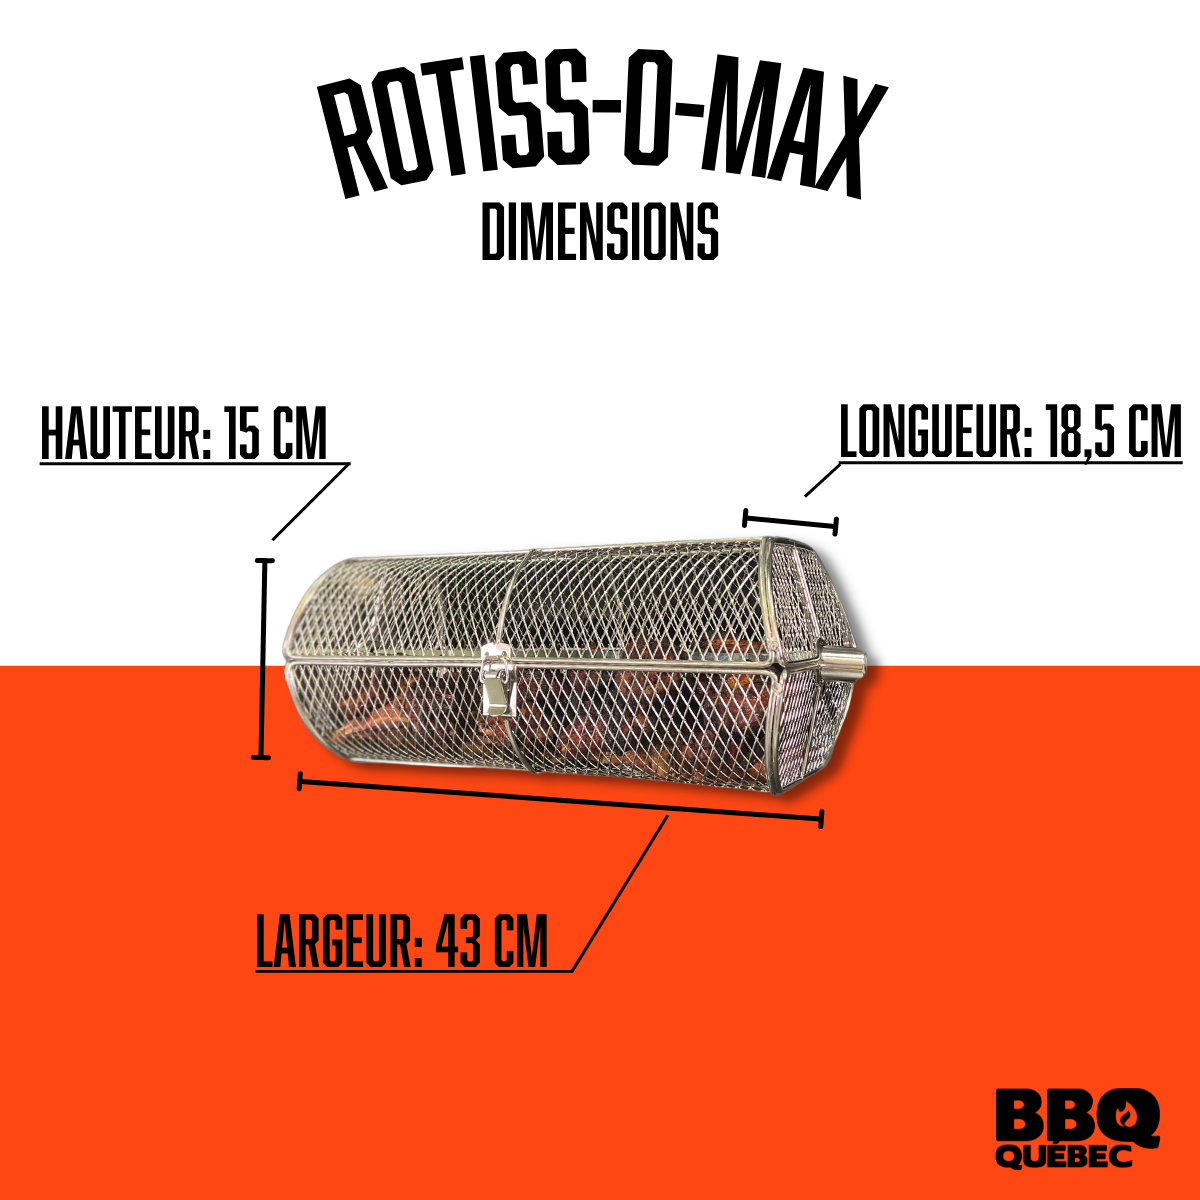 Panier à rôtissoire Rotiss-O-Max BBQ Québec